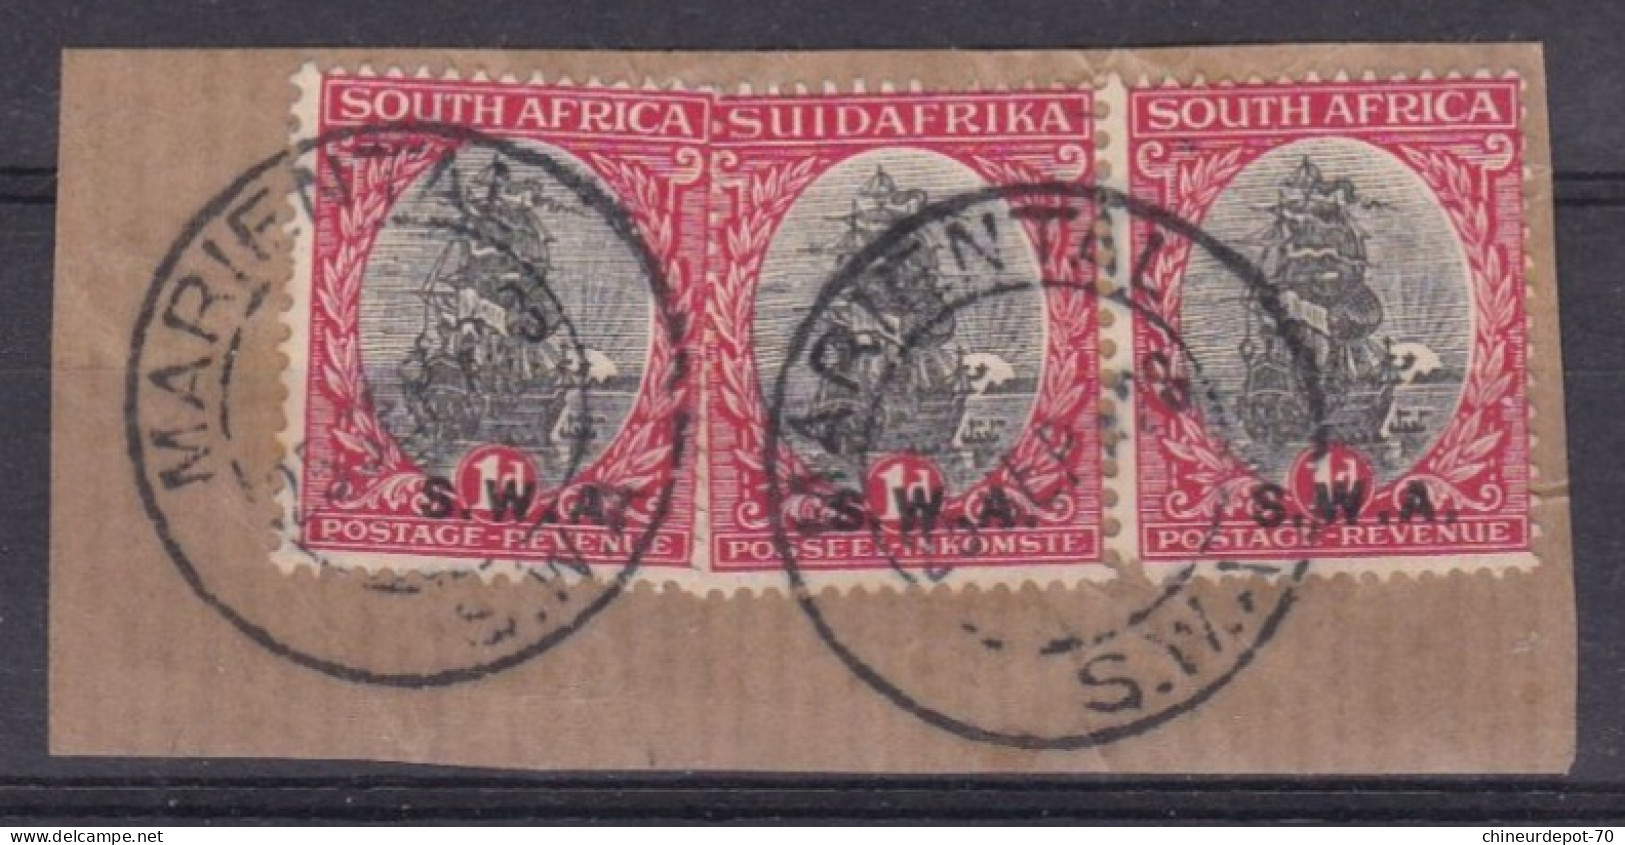 Bateau Suidafrika S W A South Africa Mariental Ville En Namibie - Used Stamps